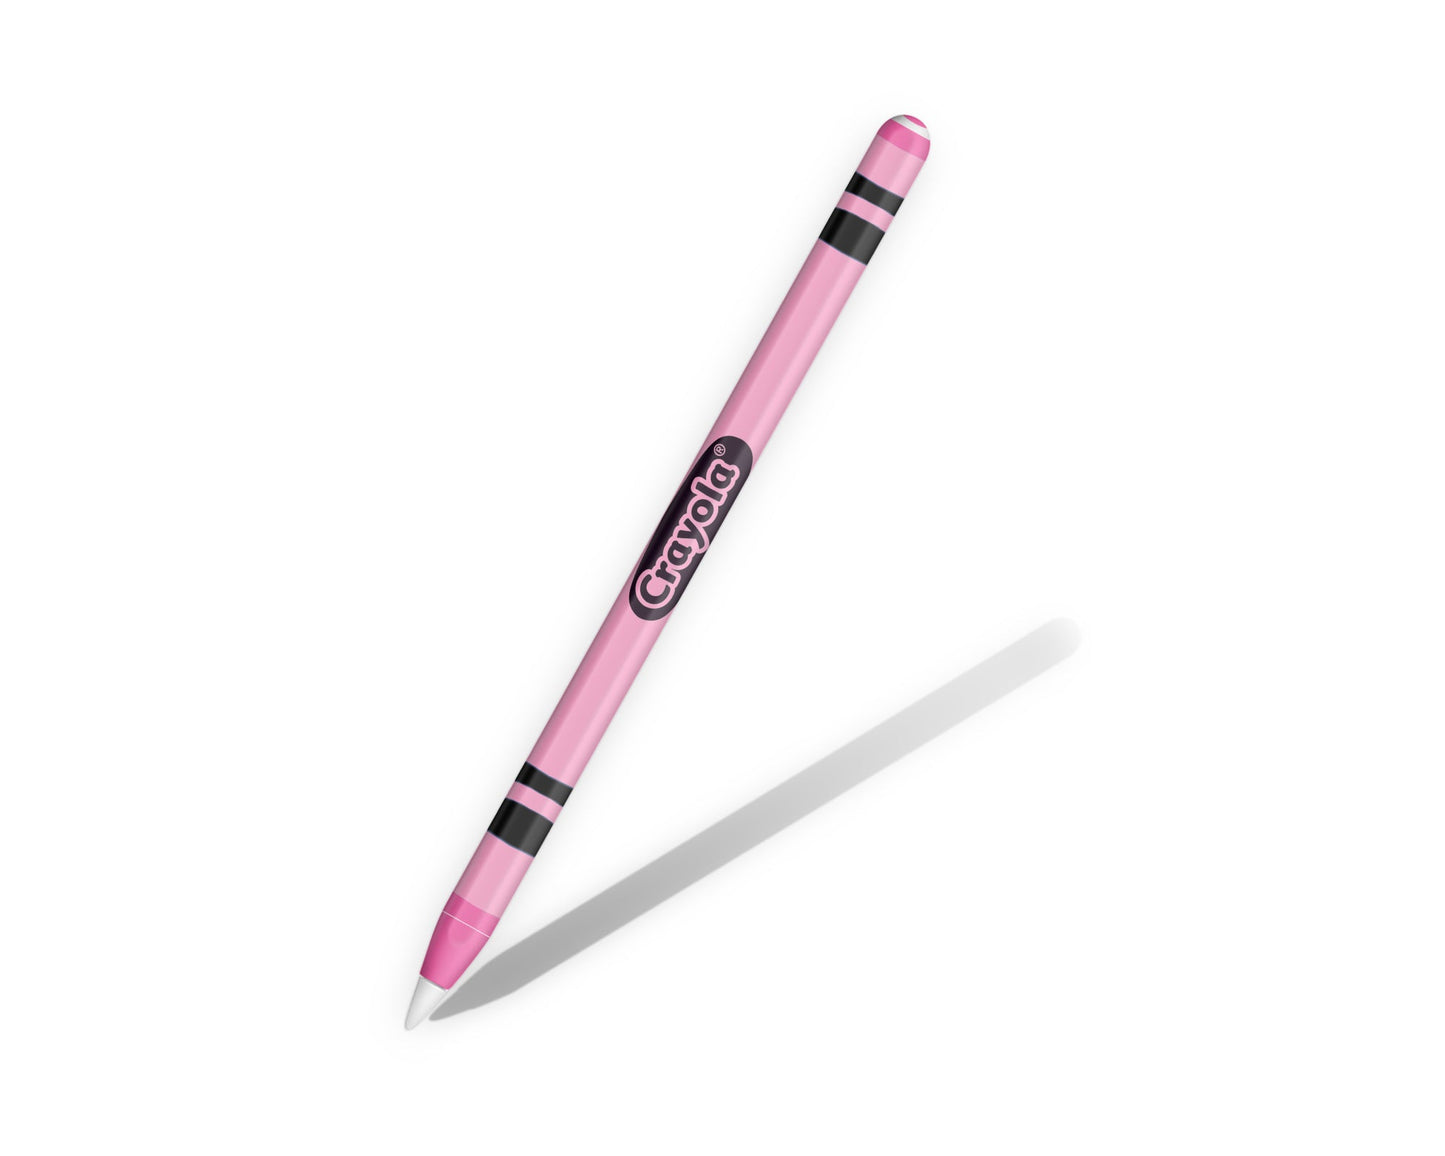 Lux Skins Apple Pencil Crayloa Pink 1st Generation Skins - Art Crayola Series Skin